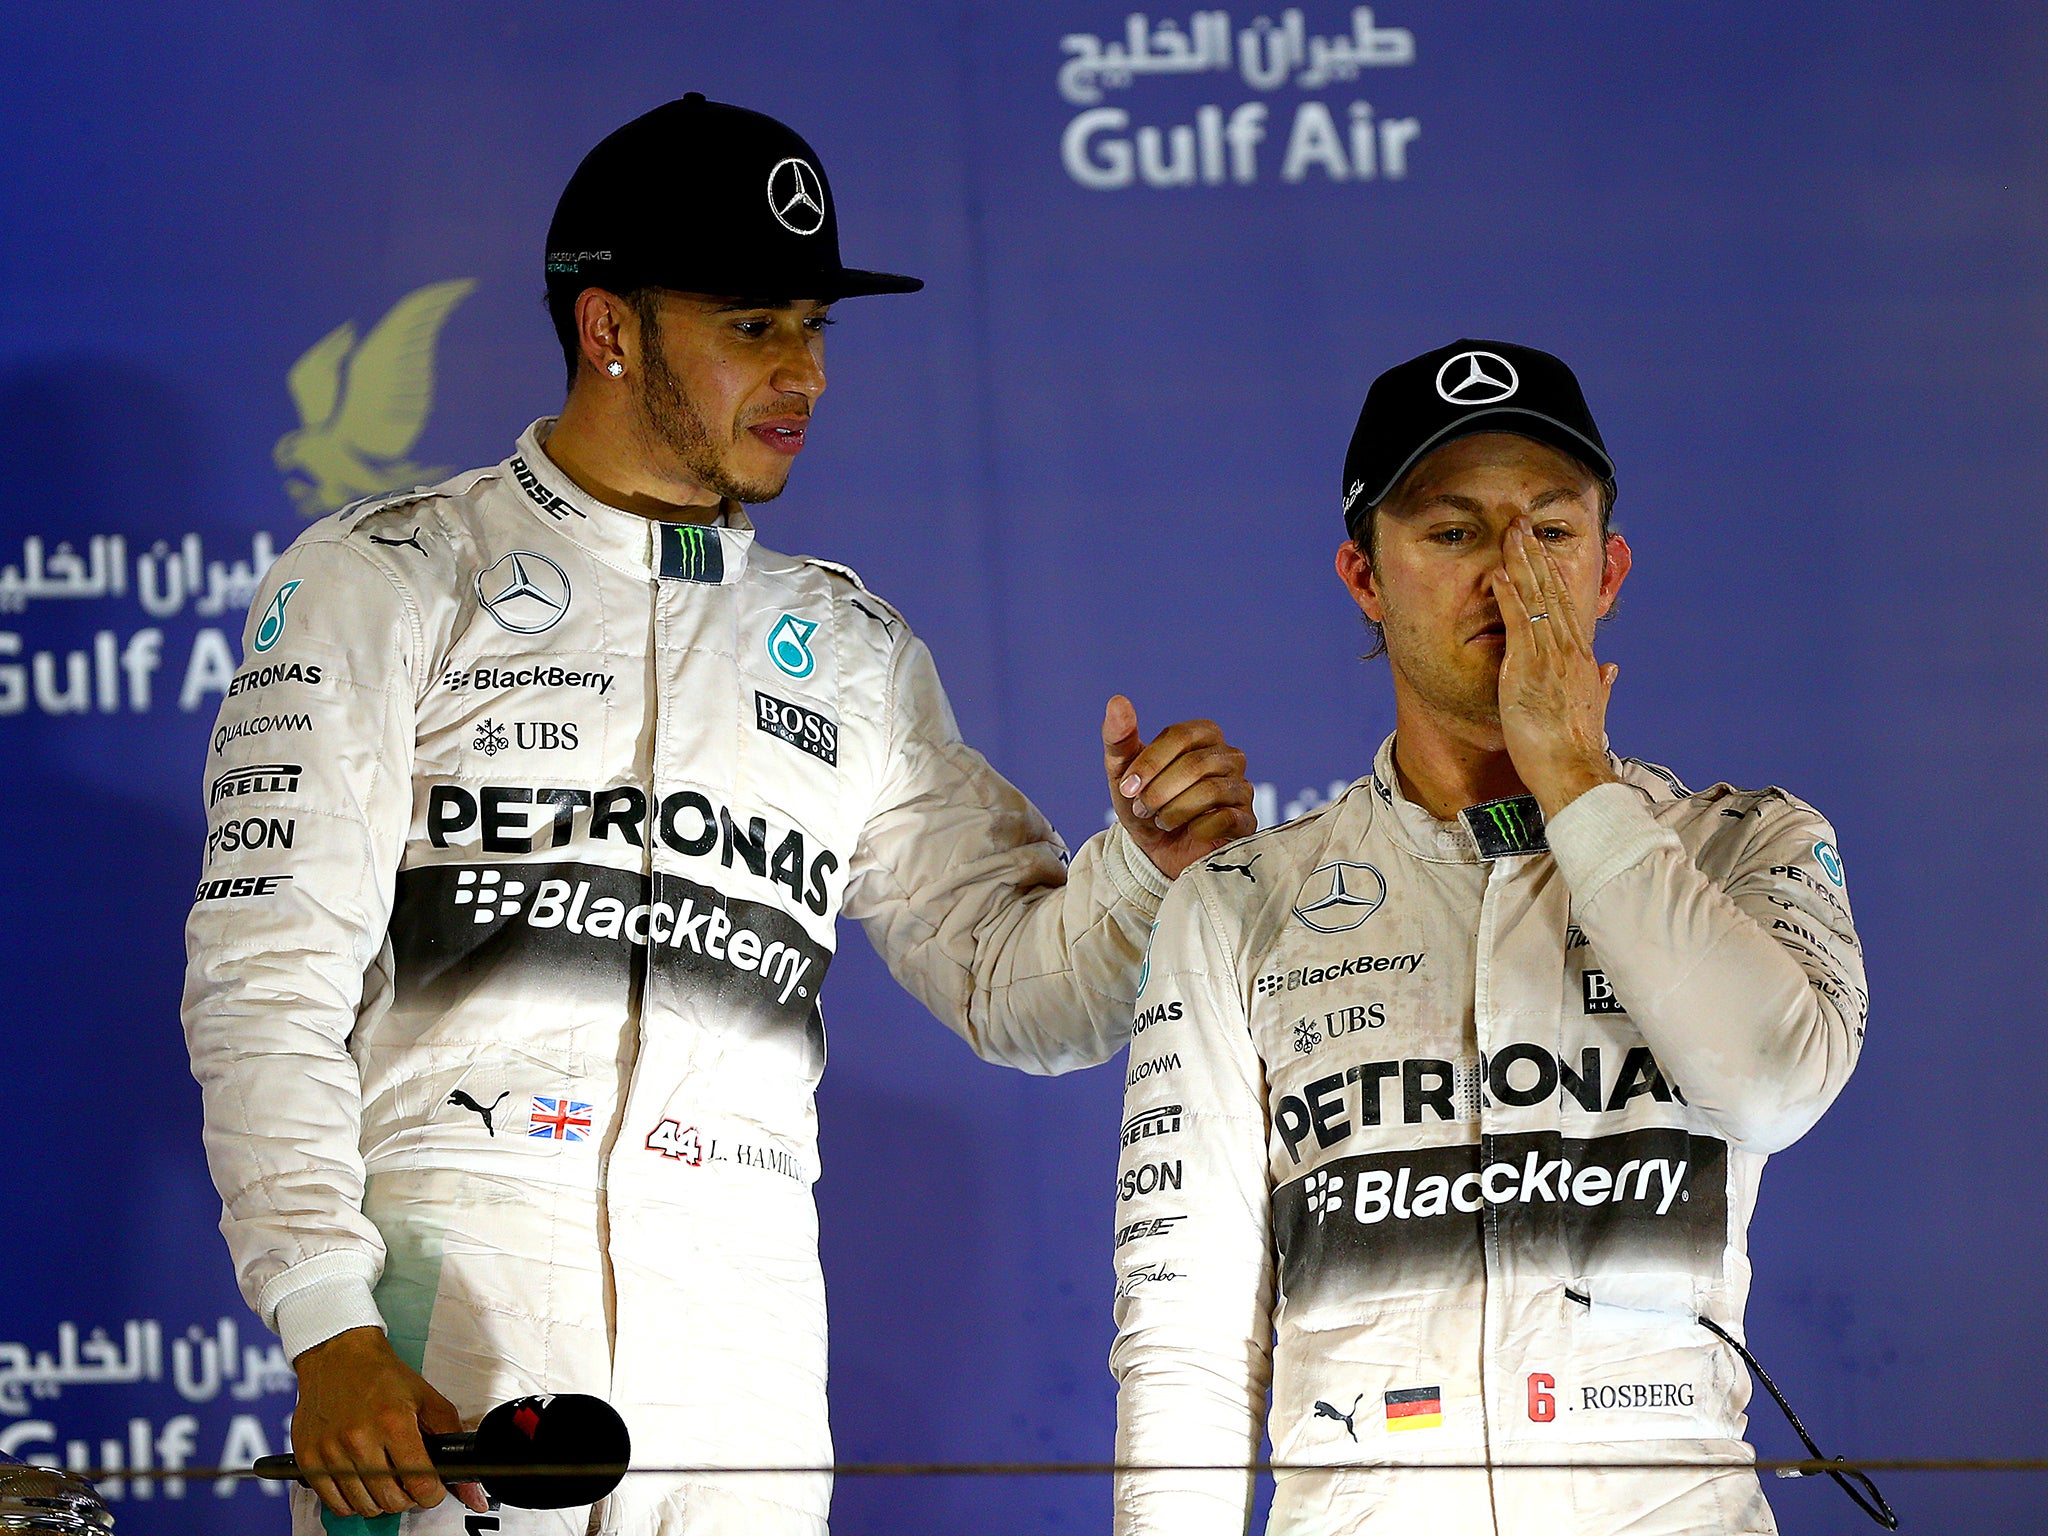 Lewis Hamilton with Nico Rosberg on the podium